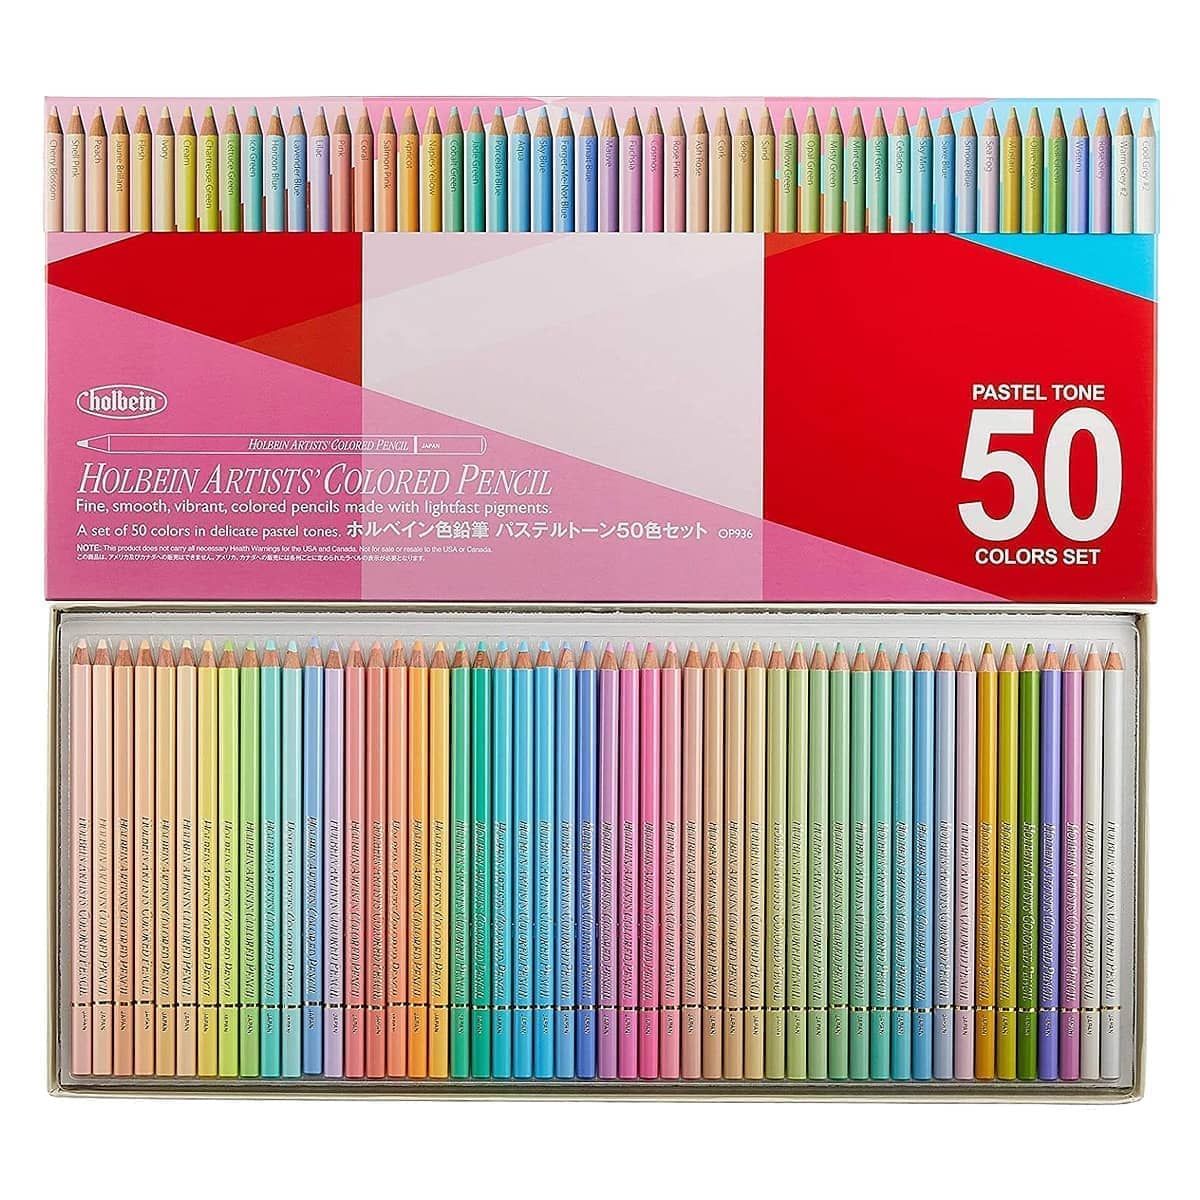 https://www.jerrysartarama.com/media/catalog/product/cache/ecb49a32eeb5603594b082bd5fe65733/p/a/pastel-tones-cardboard-set-of-50-holbein-artist-colored-pencils-1-ls-v37866.jpg